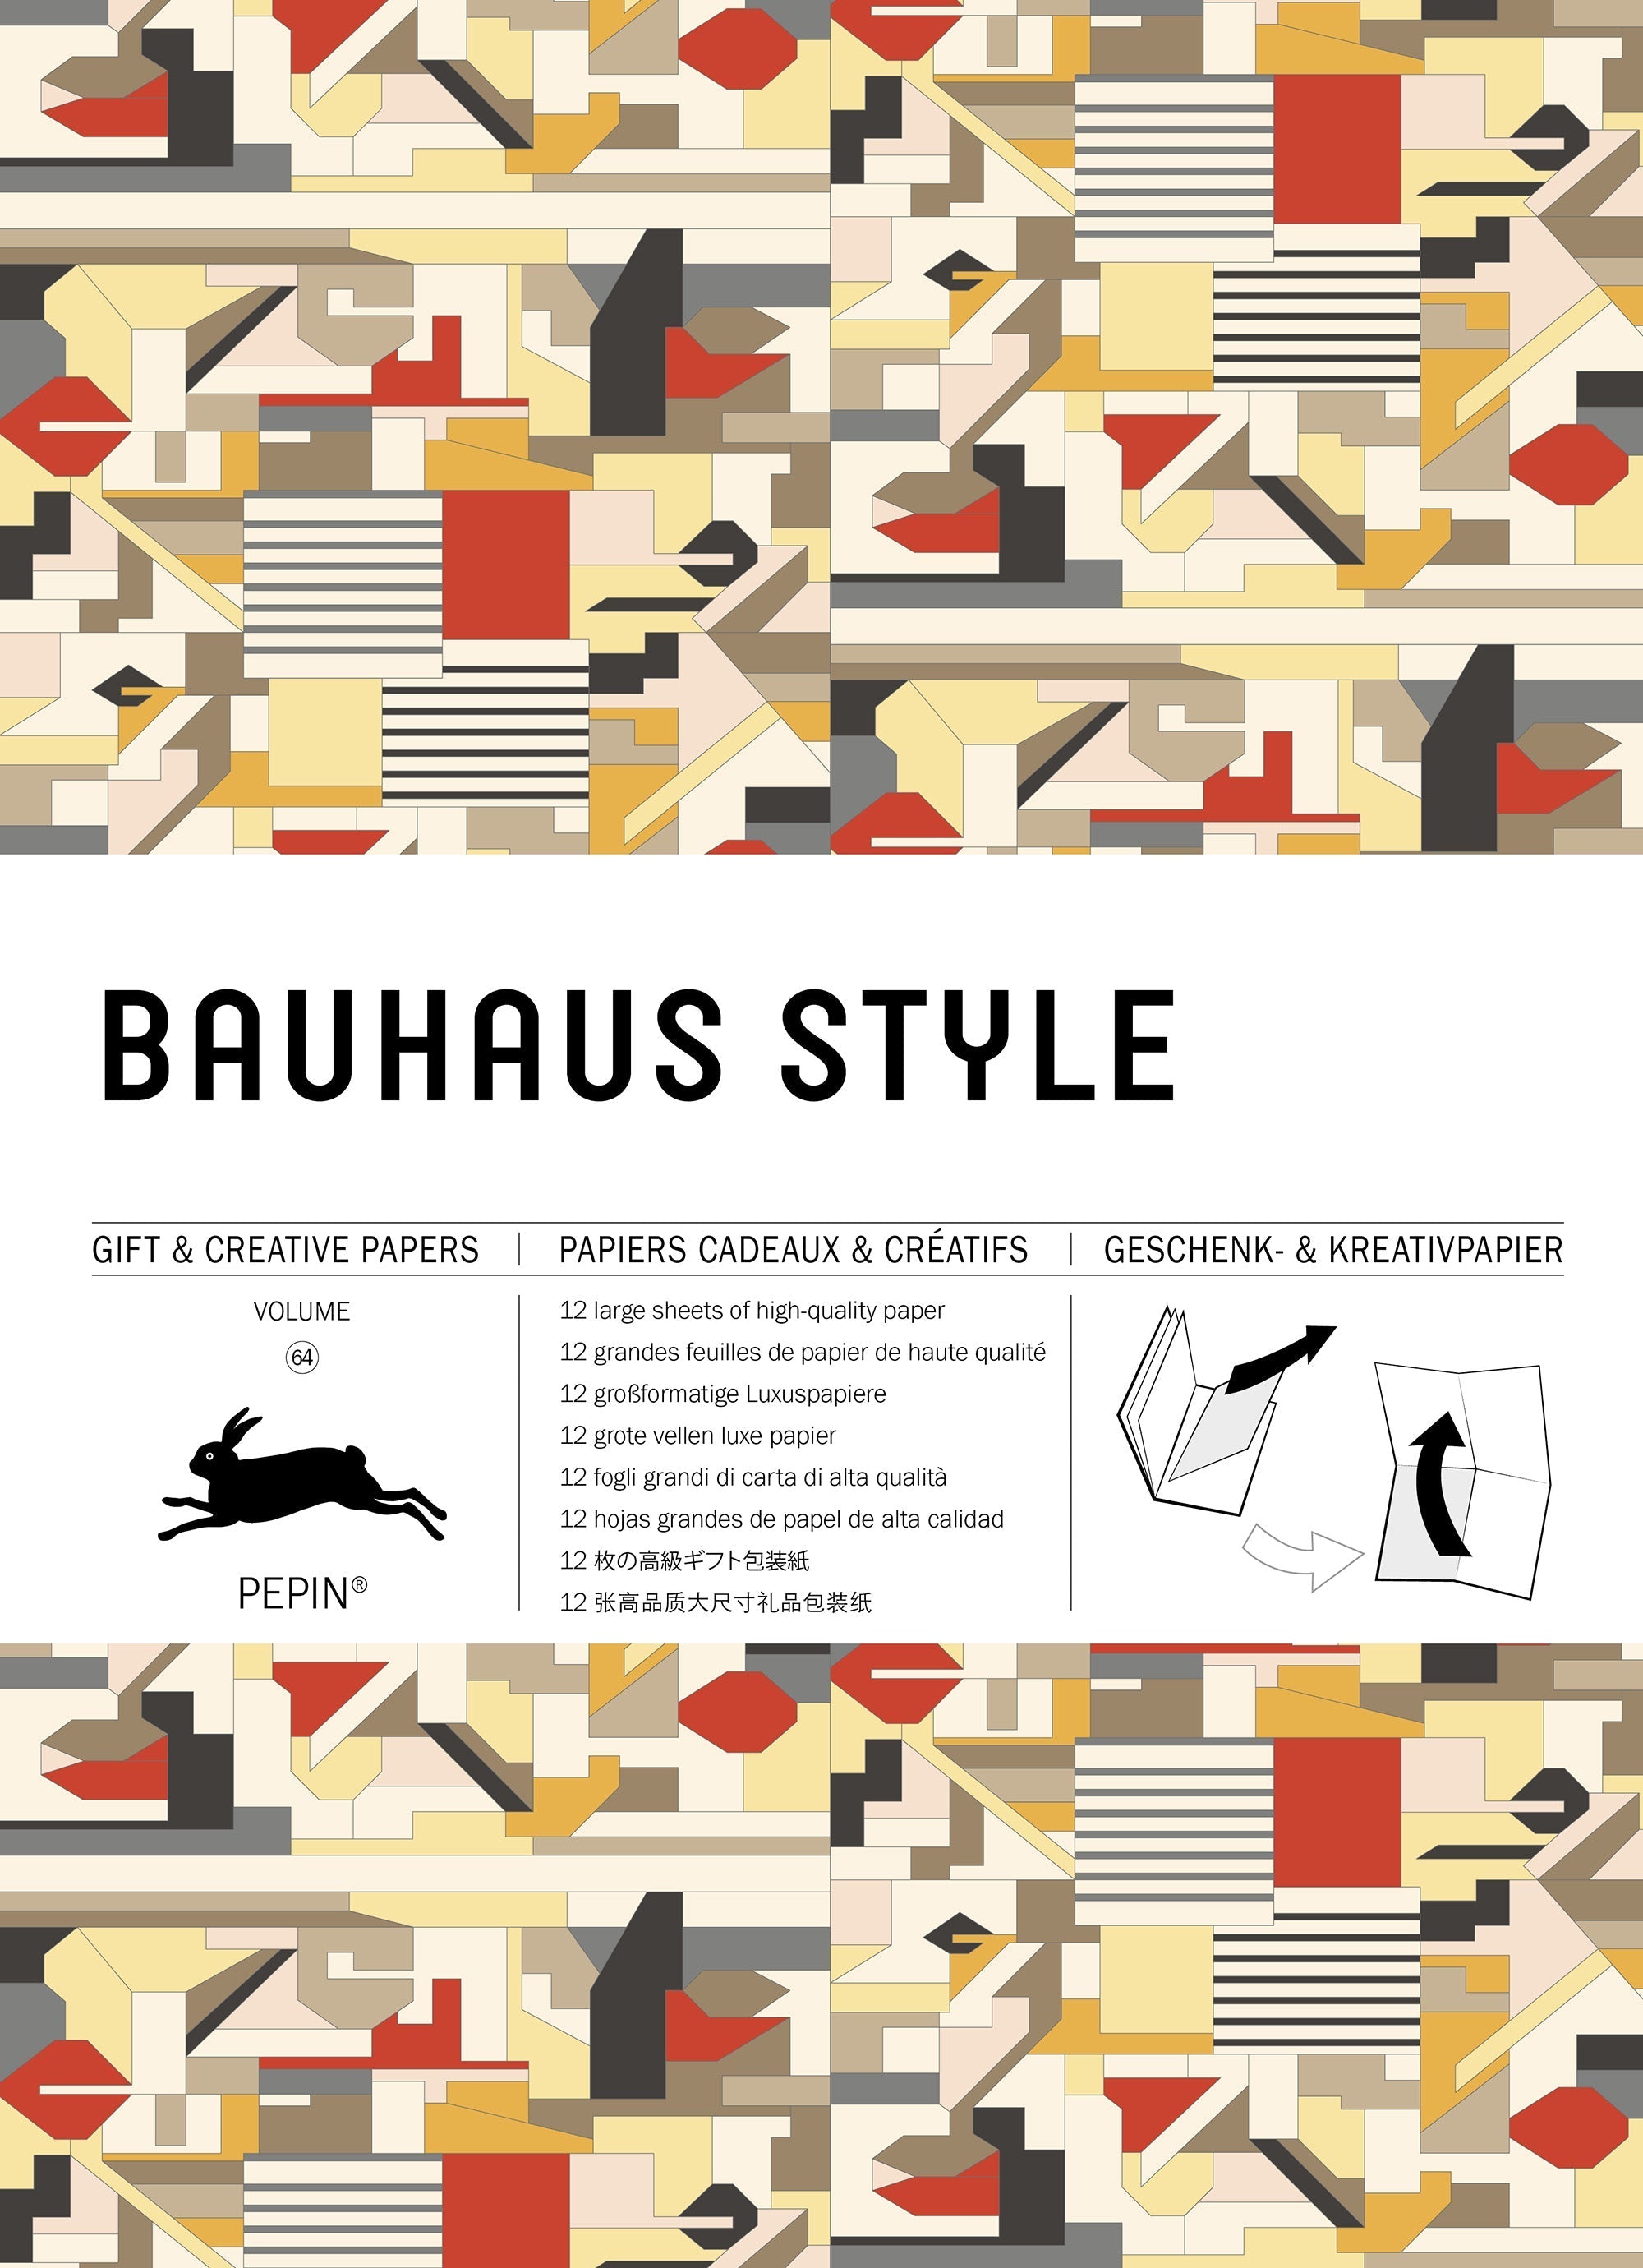 Gift & creative papers - Bauhaus